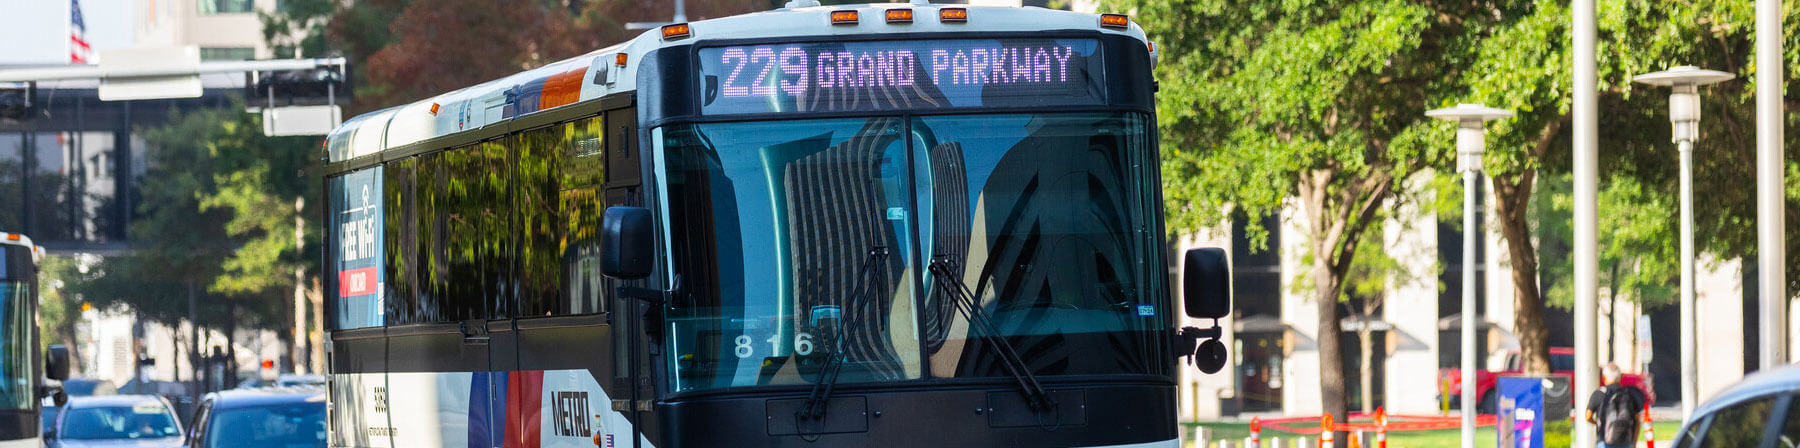 229 Addicks / Kingsland / Grand Parkway Park & Ride bus